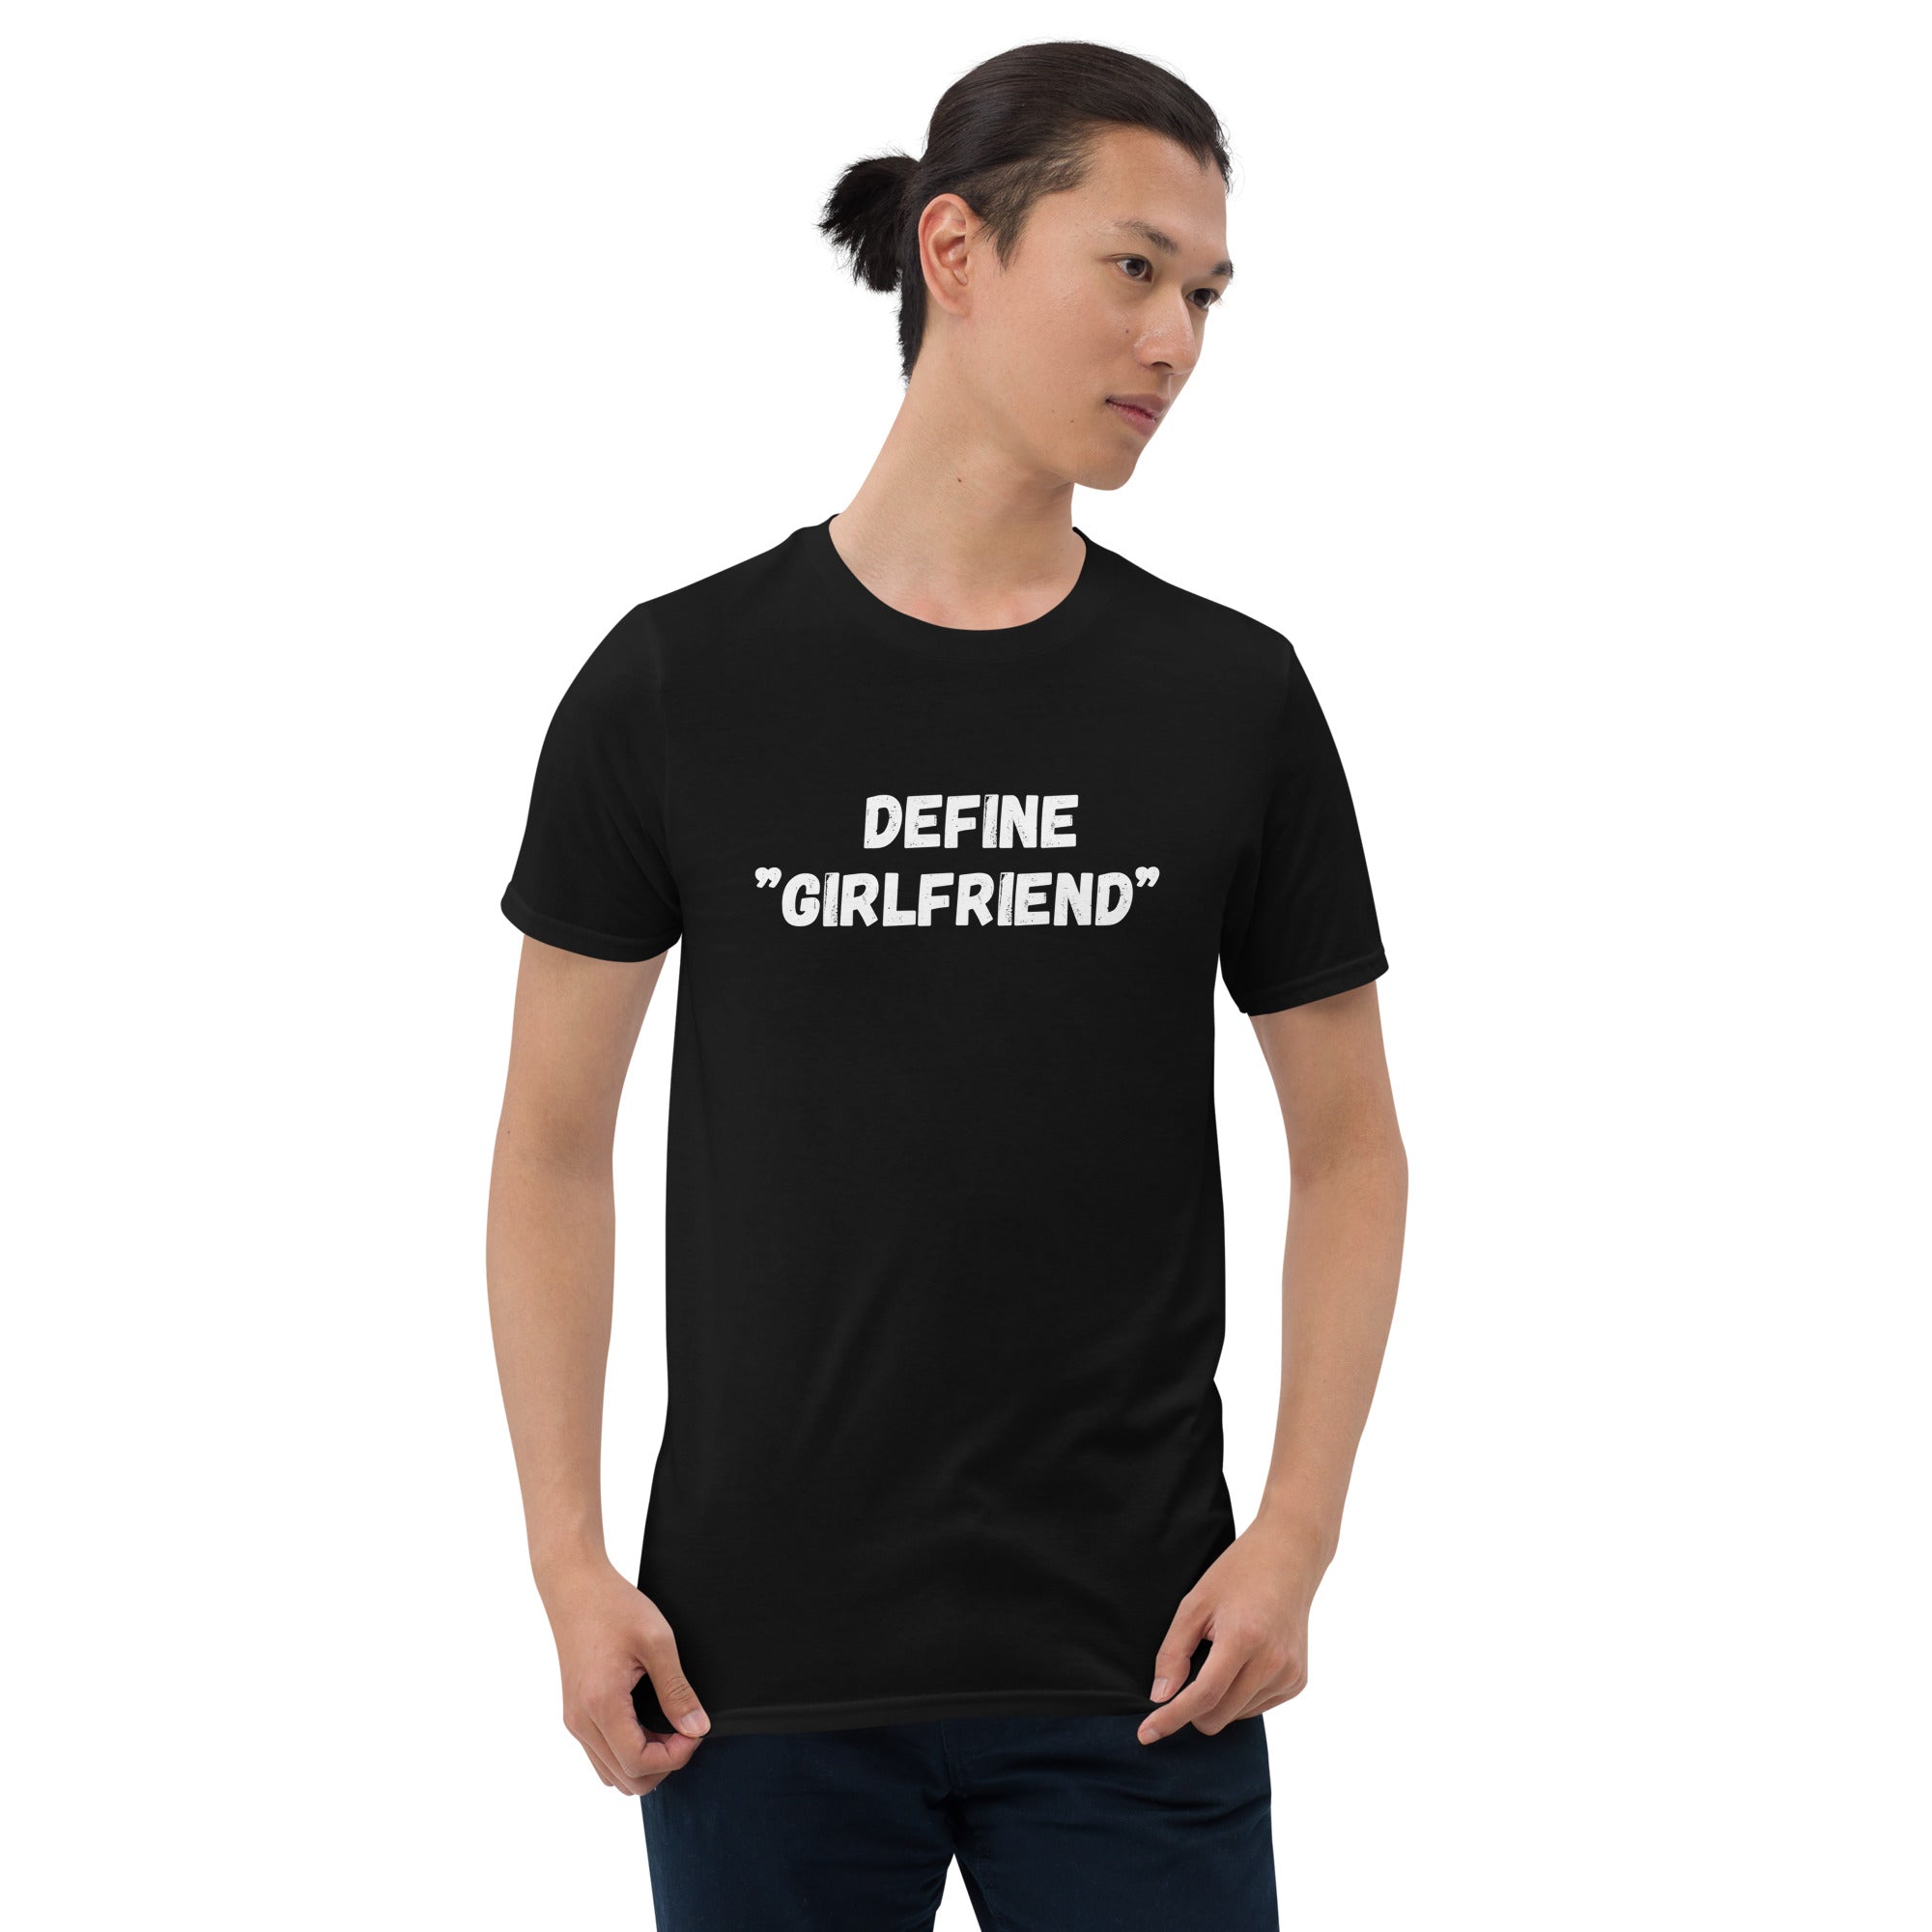 DEFINE GIRLFRIEND T-Shirt